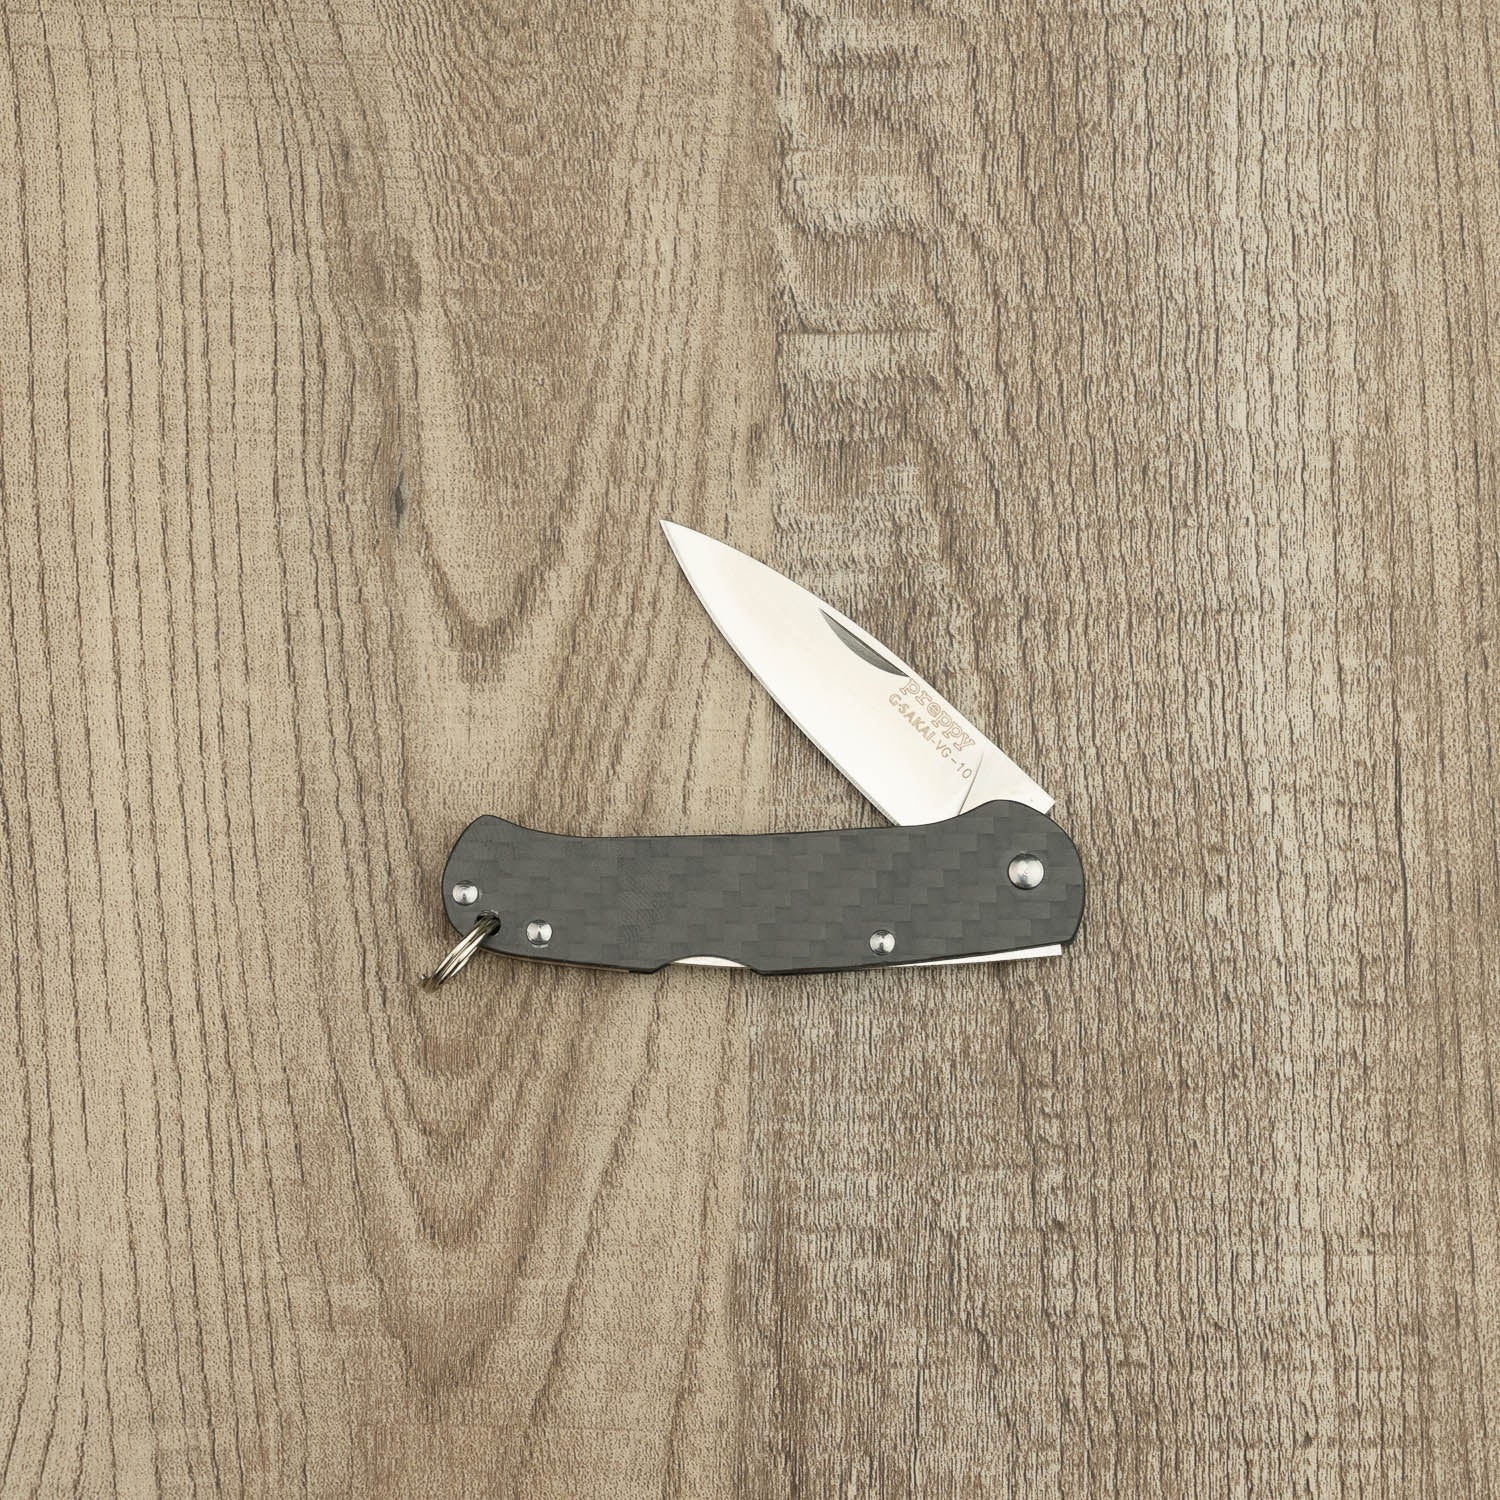 G.SAKAI Preppy Folding Knife 40mm